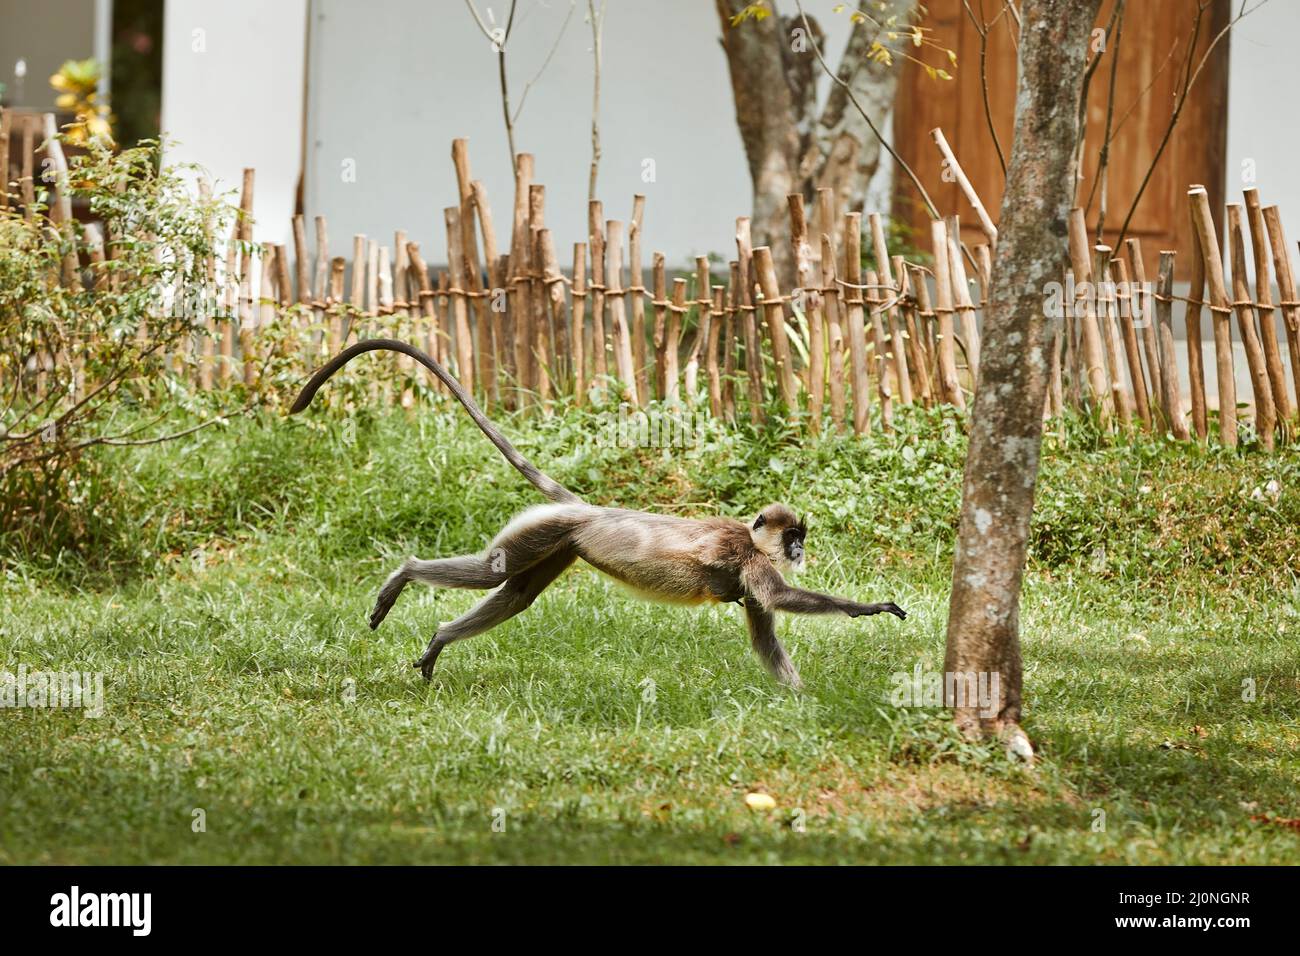 Fast running monkey in grass. Langur in motion against house in village in Sri Lanka. Stock Photo